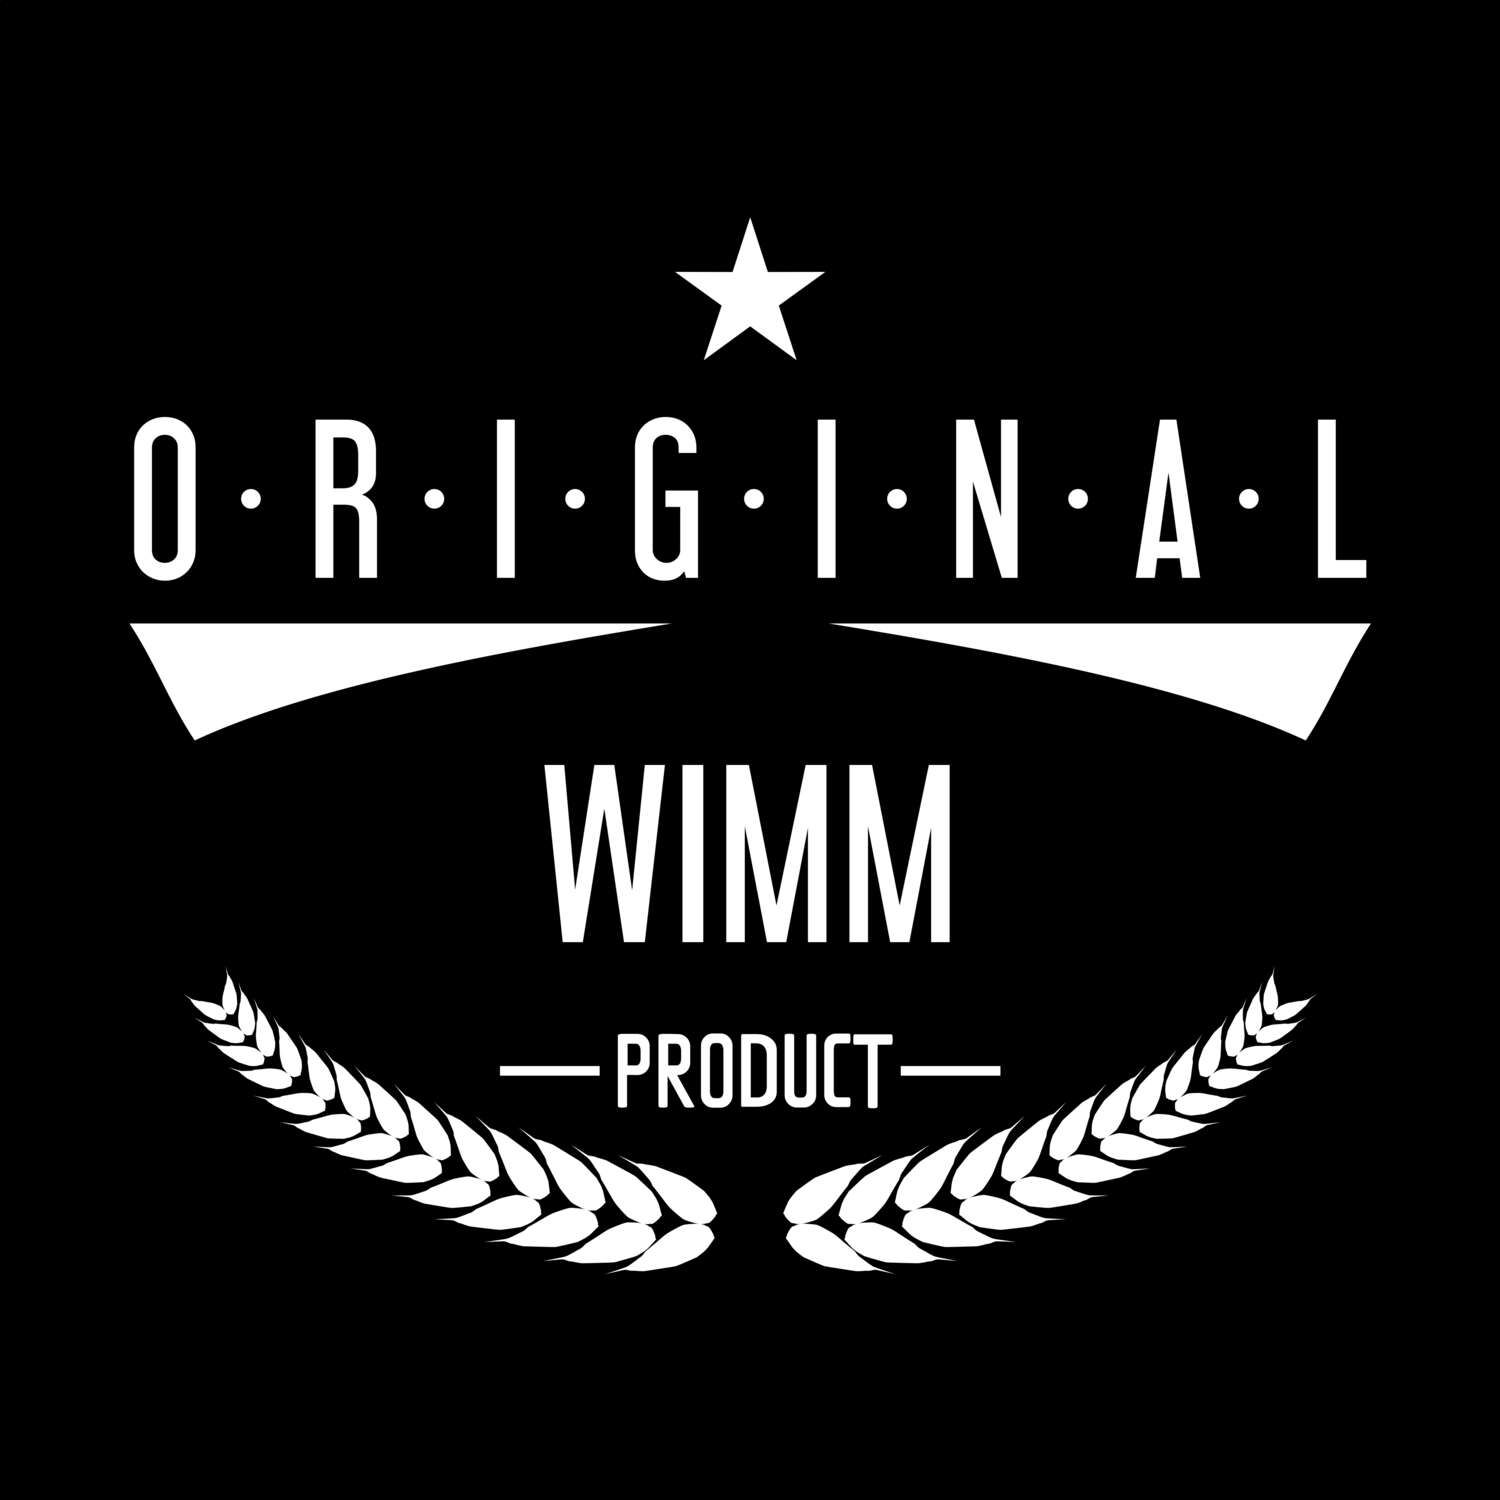 Wimm T-Shirt »Original Product«